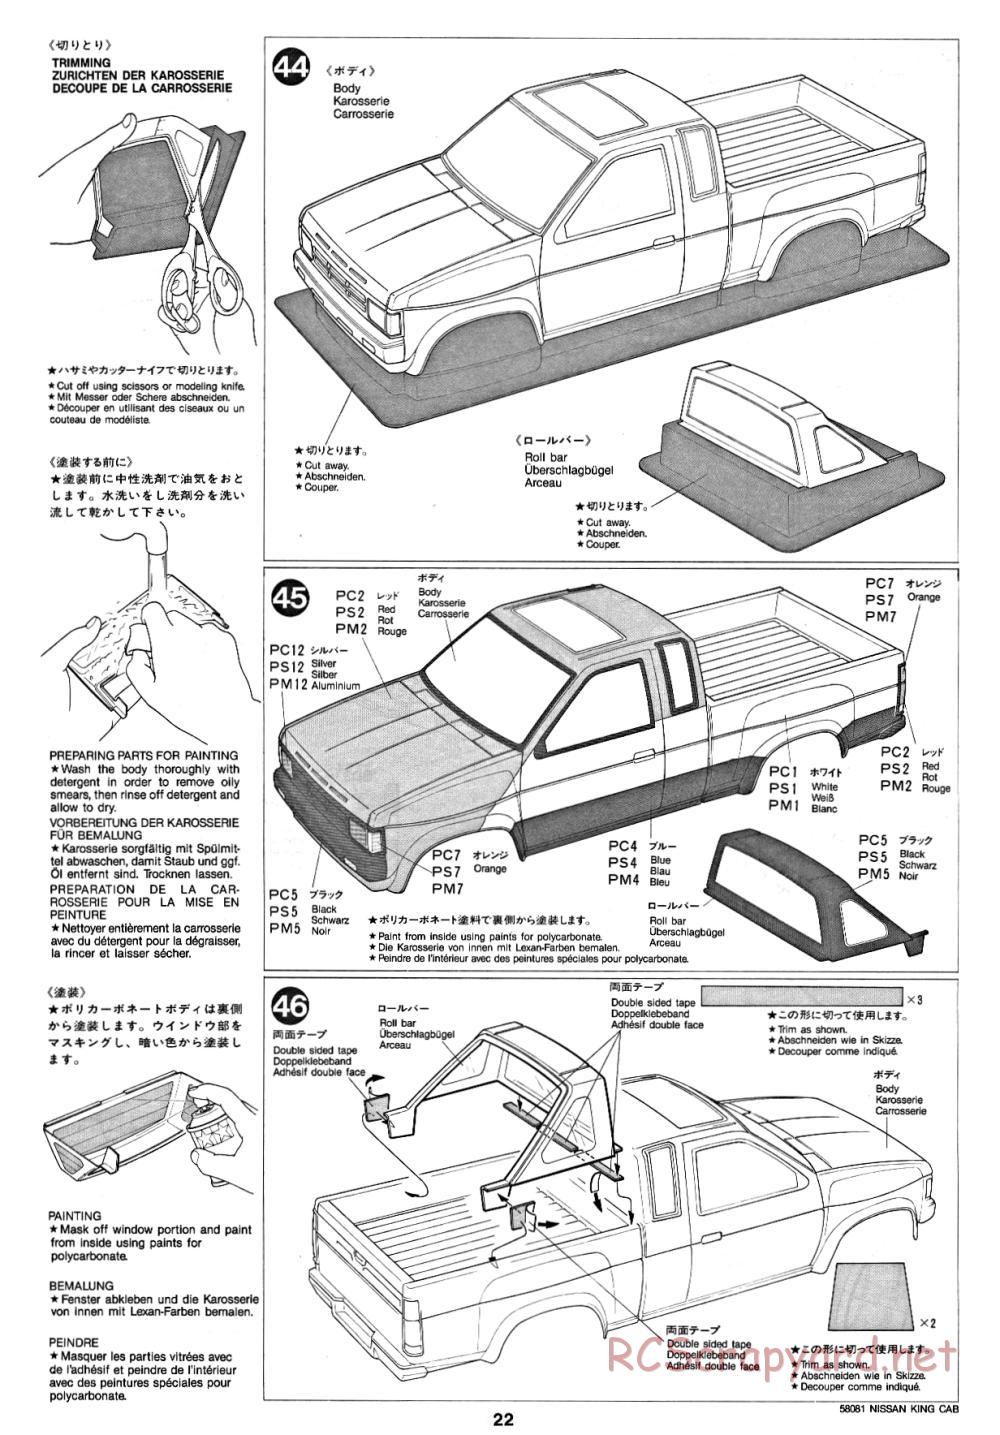 Tamiya - Nissan King Cab - 58081 - Manual - Page 22